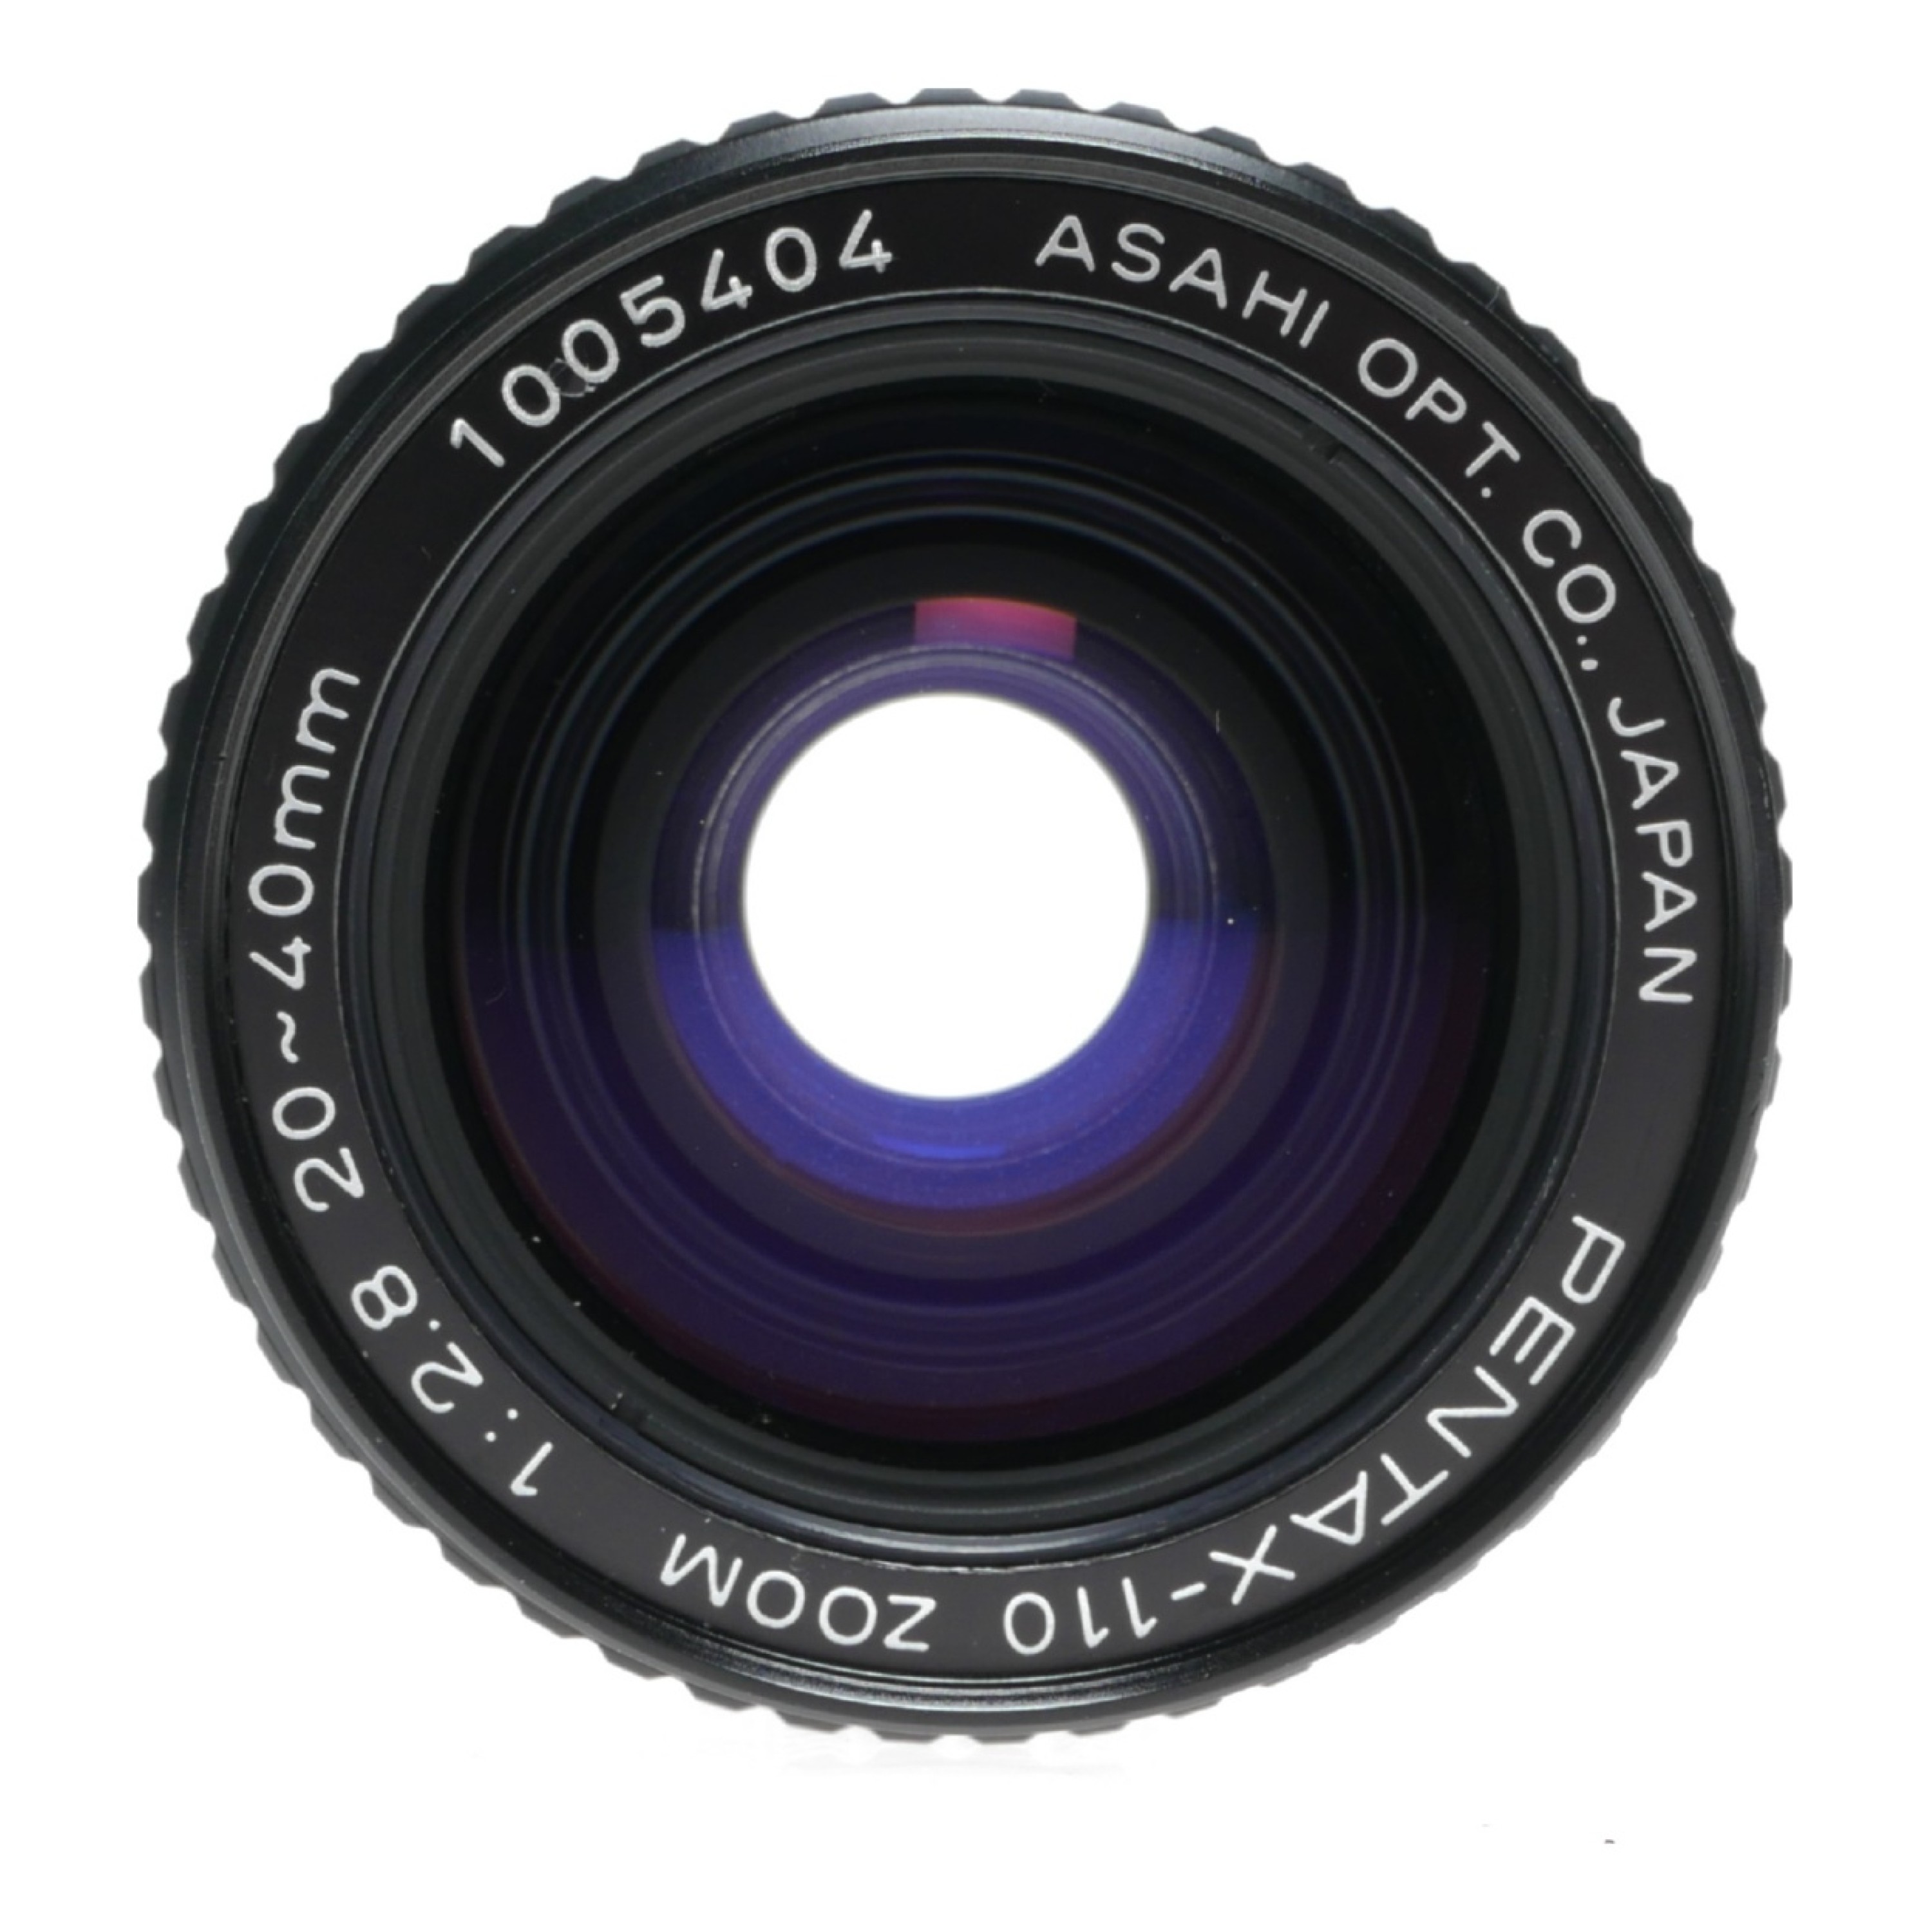 Pentax-110 Zoom 1:2.8 20-40mm subminiature lens f/2.8 lens case